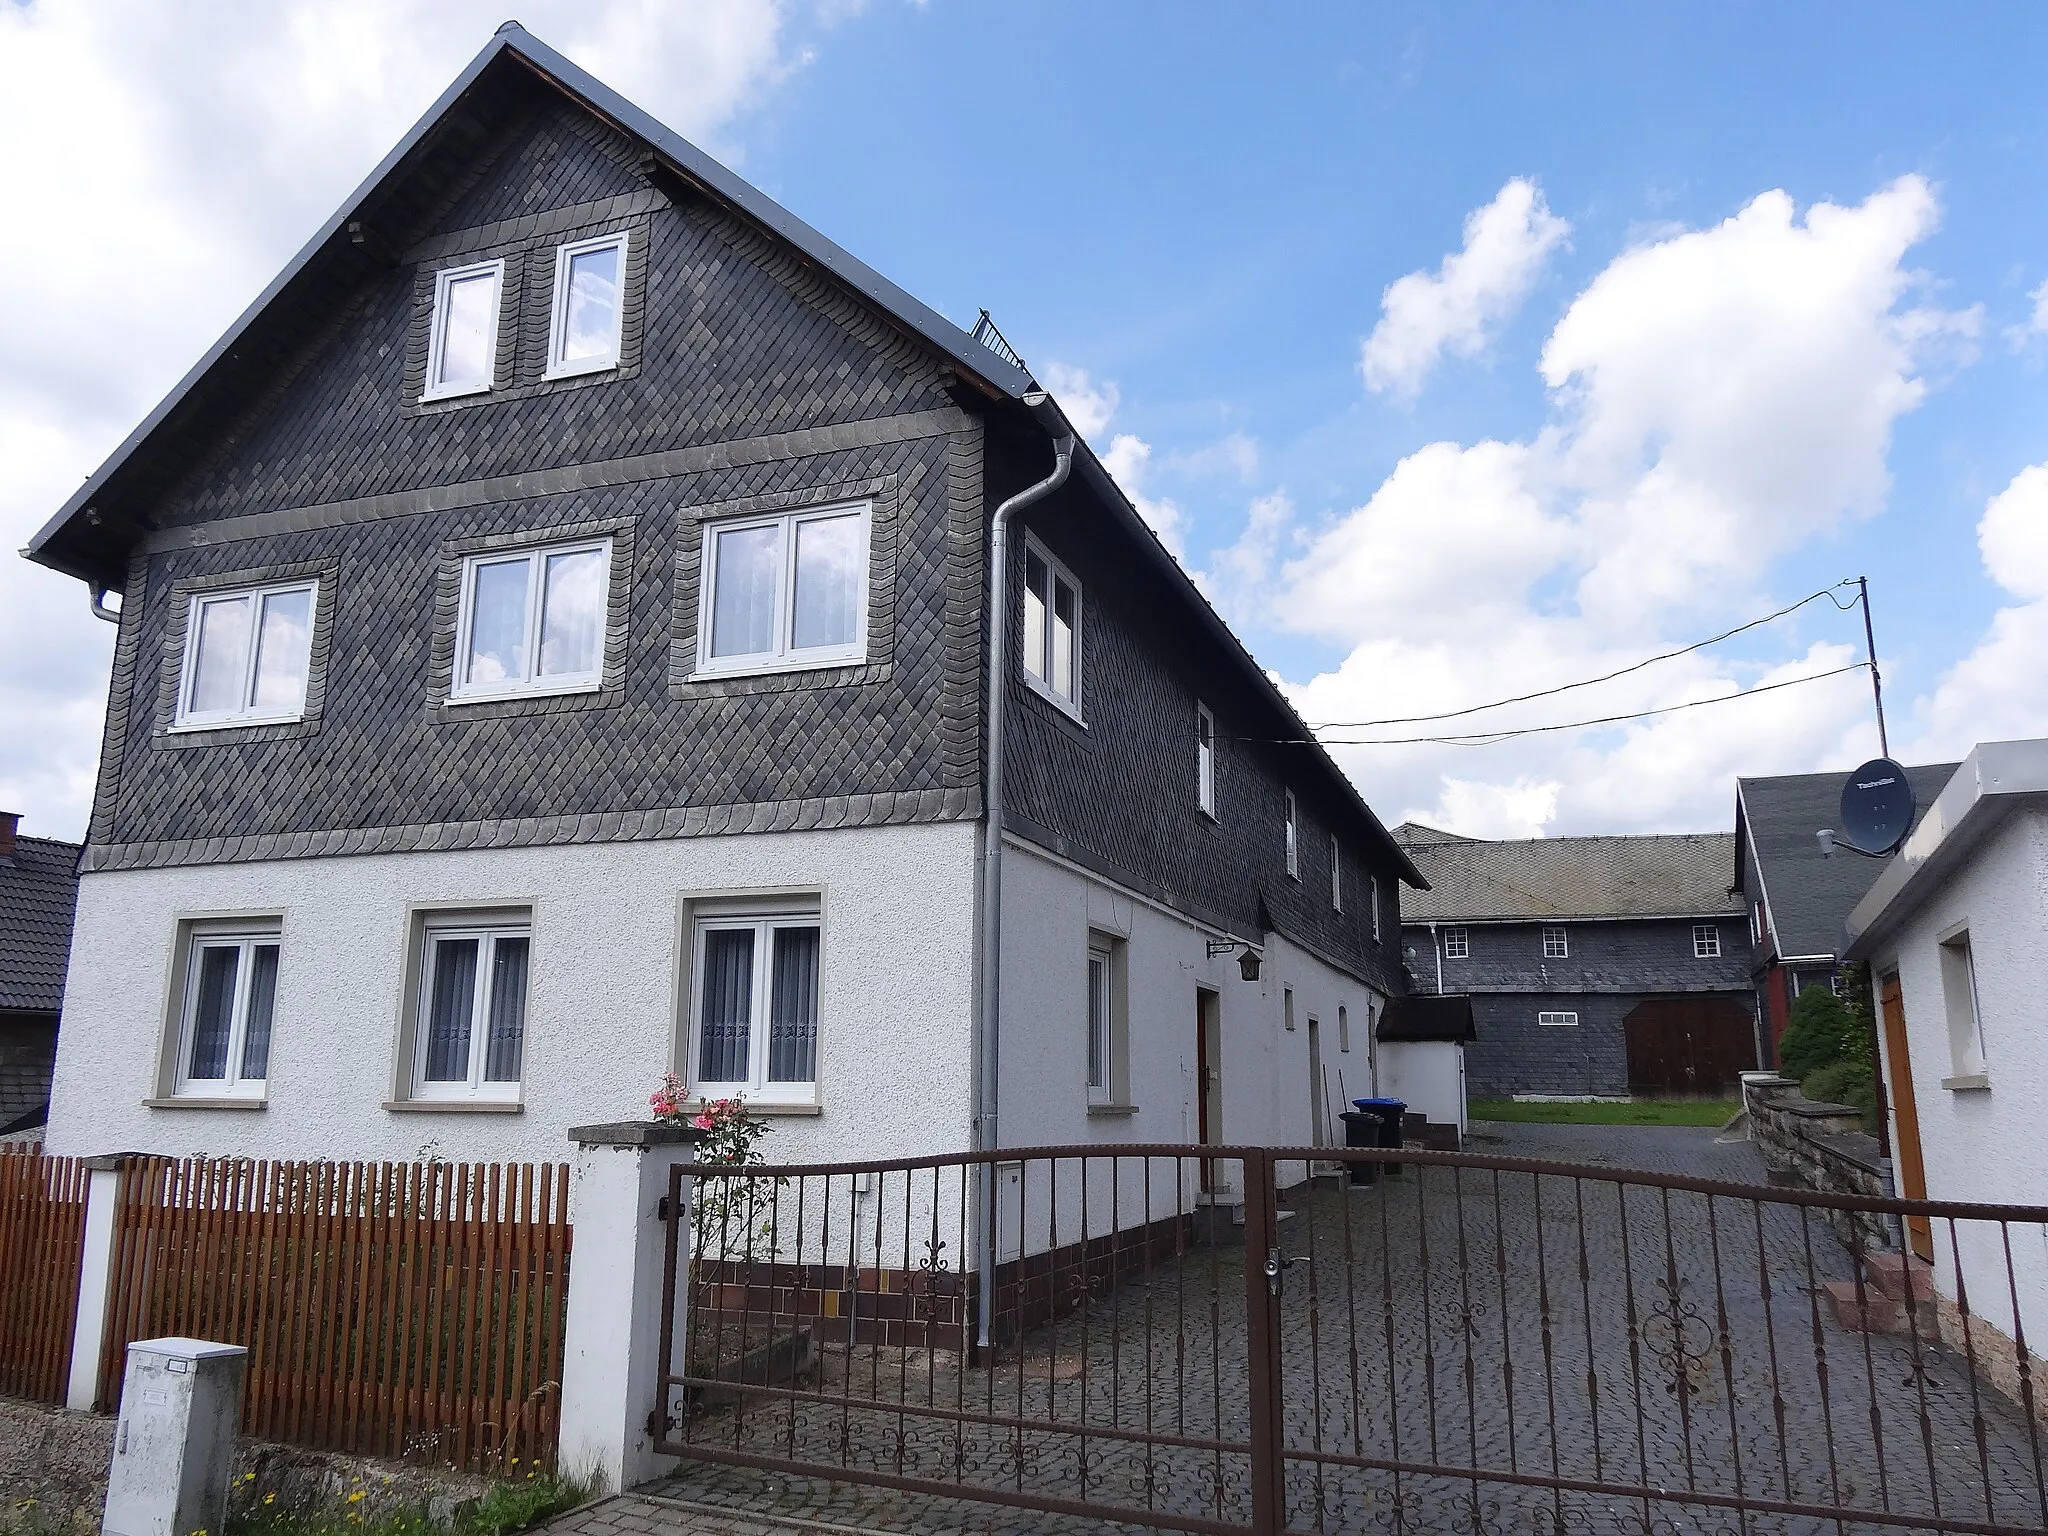 Photo showing: Haus mit slate in Witzendorf, Saalfelder Höhe, Thuringia, Germany